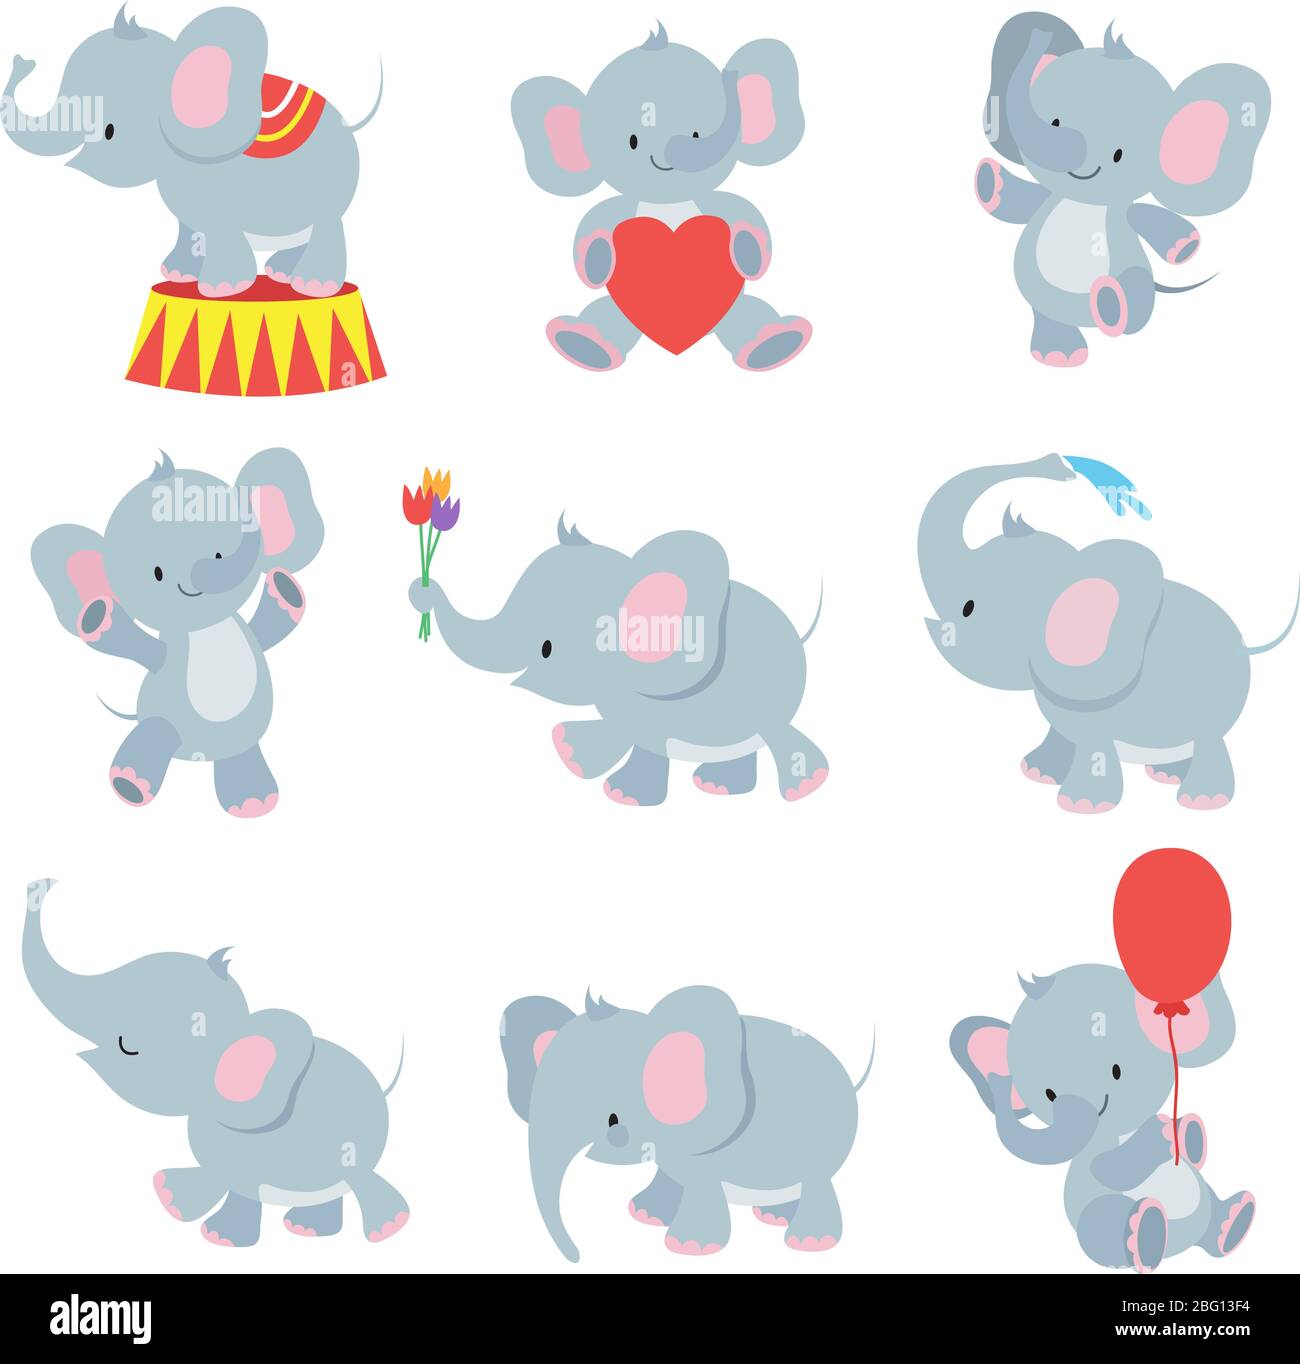 Lustige Cartoon Baby Elefanten Vektor Sammlung für Kinder Aufkleber. Elefant lustige Charakter mit Blume und Luftballon Illustration Stock Vektor